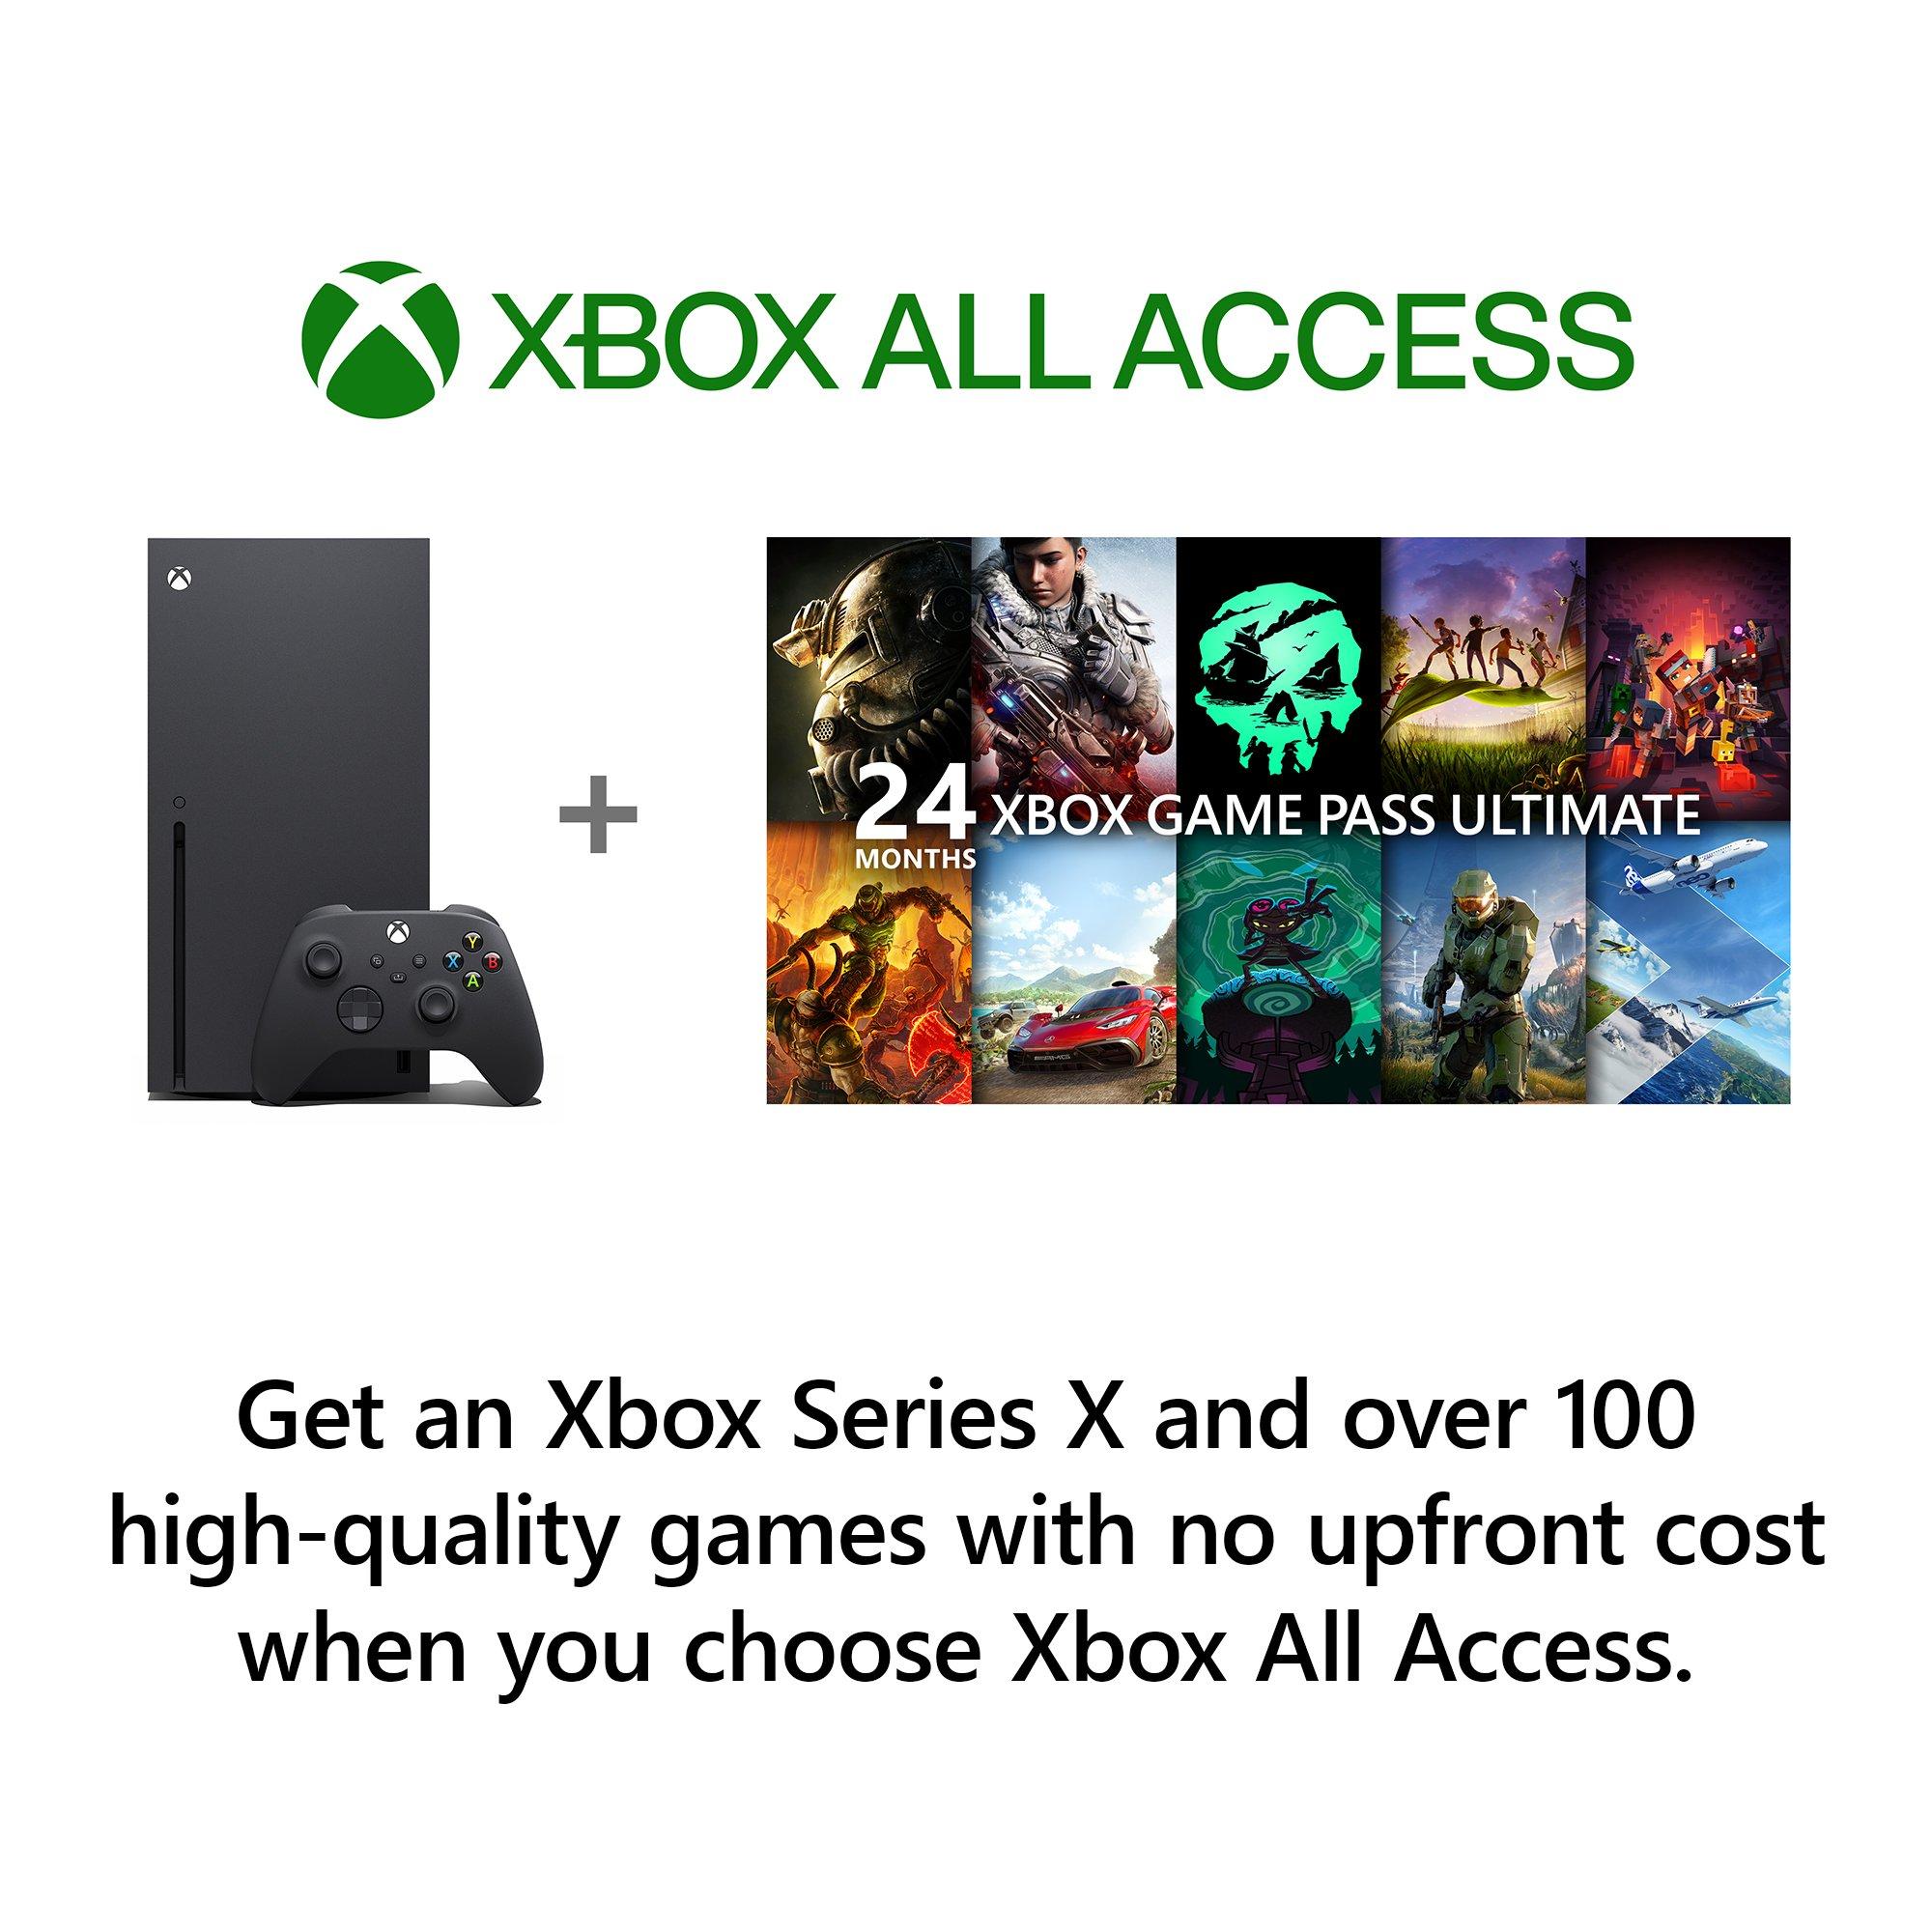 Microsoft XBOX Games - Halo MF ite, Xbox Series X, Xbox Series S